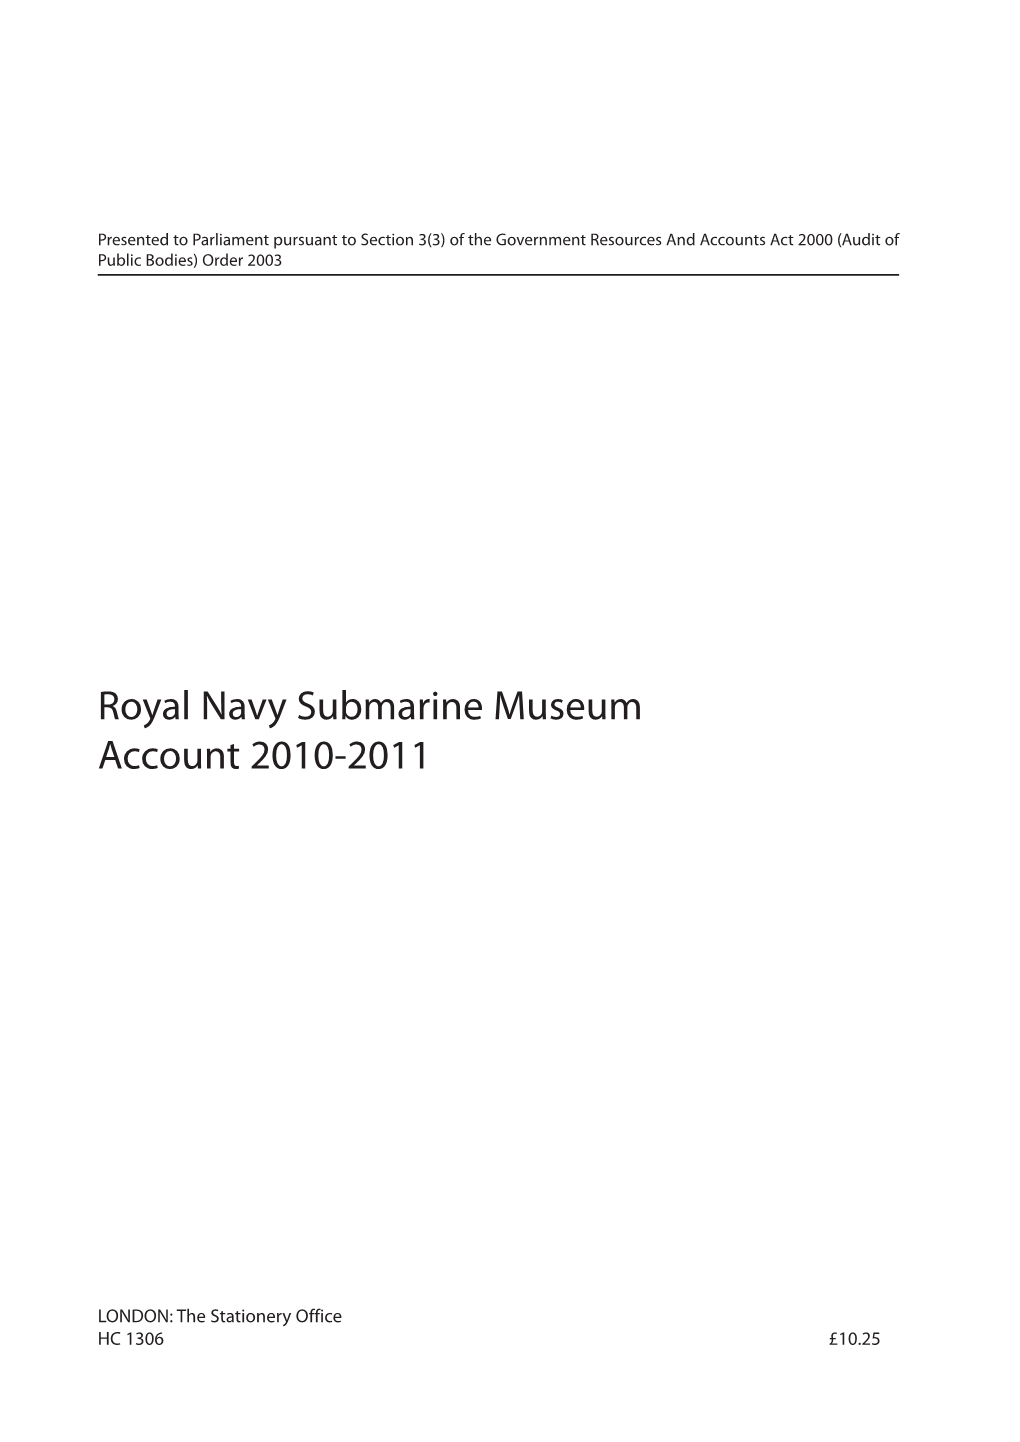 Royal Navy Submarine Museum Accounts HC 1306